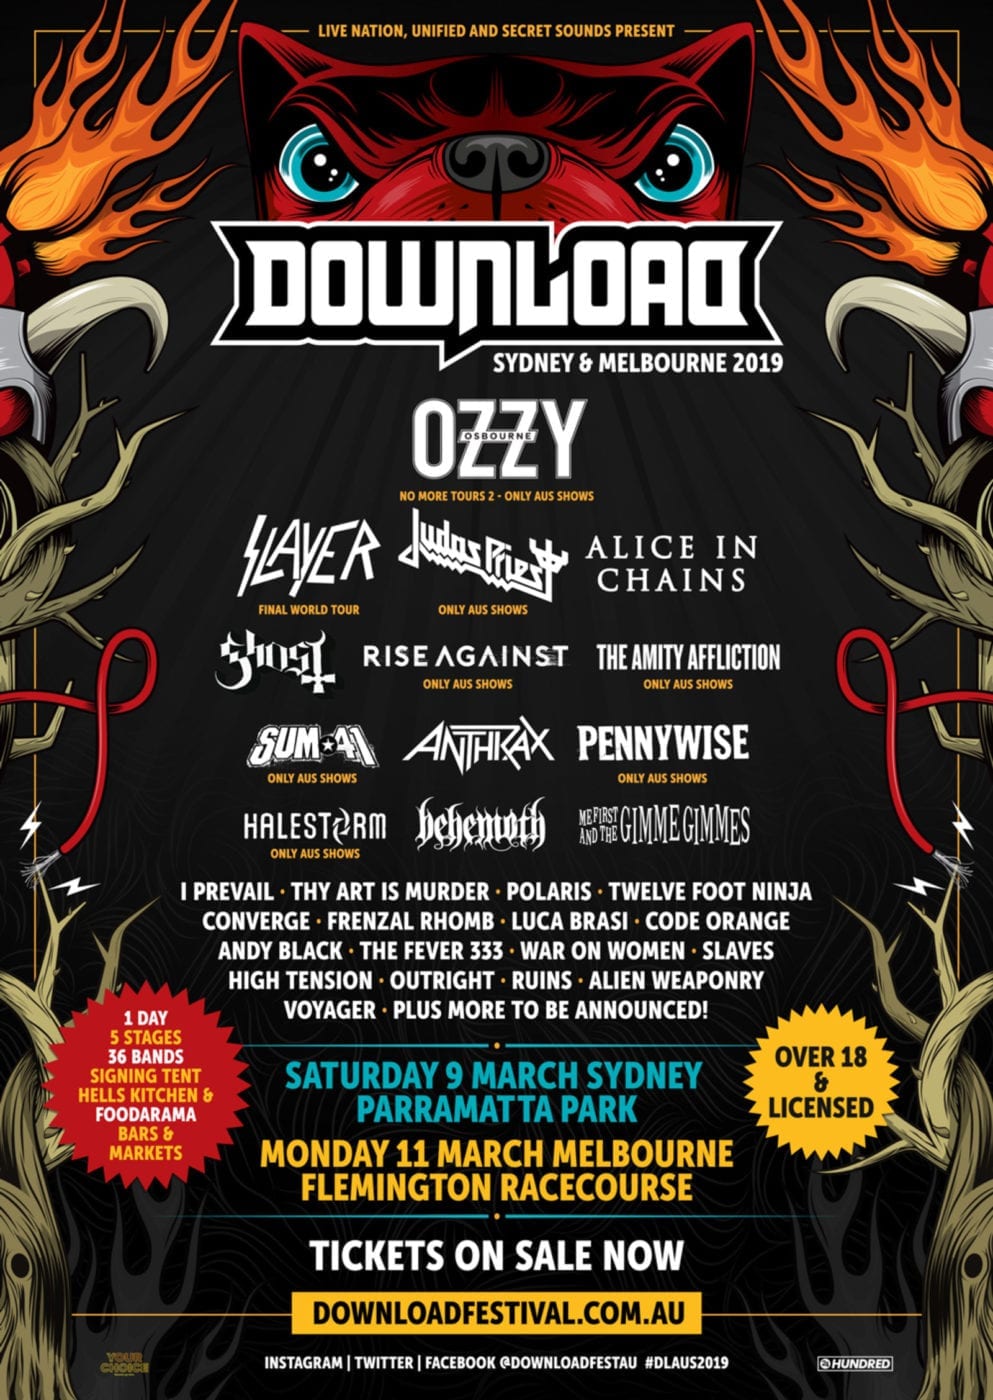 Download Festival 2019 poster